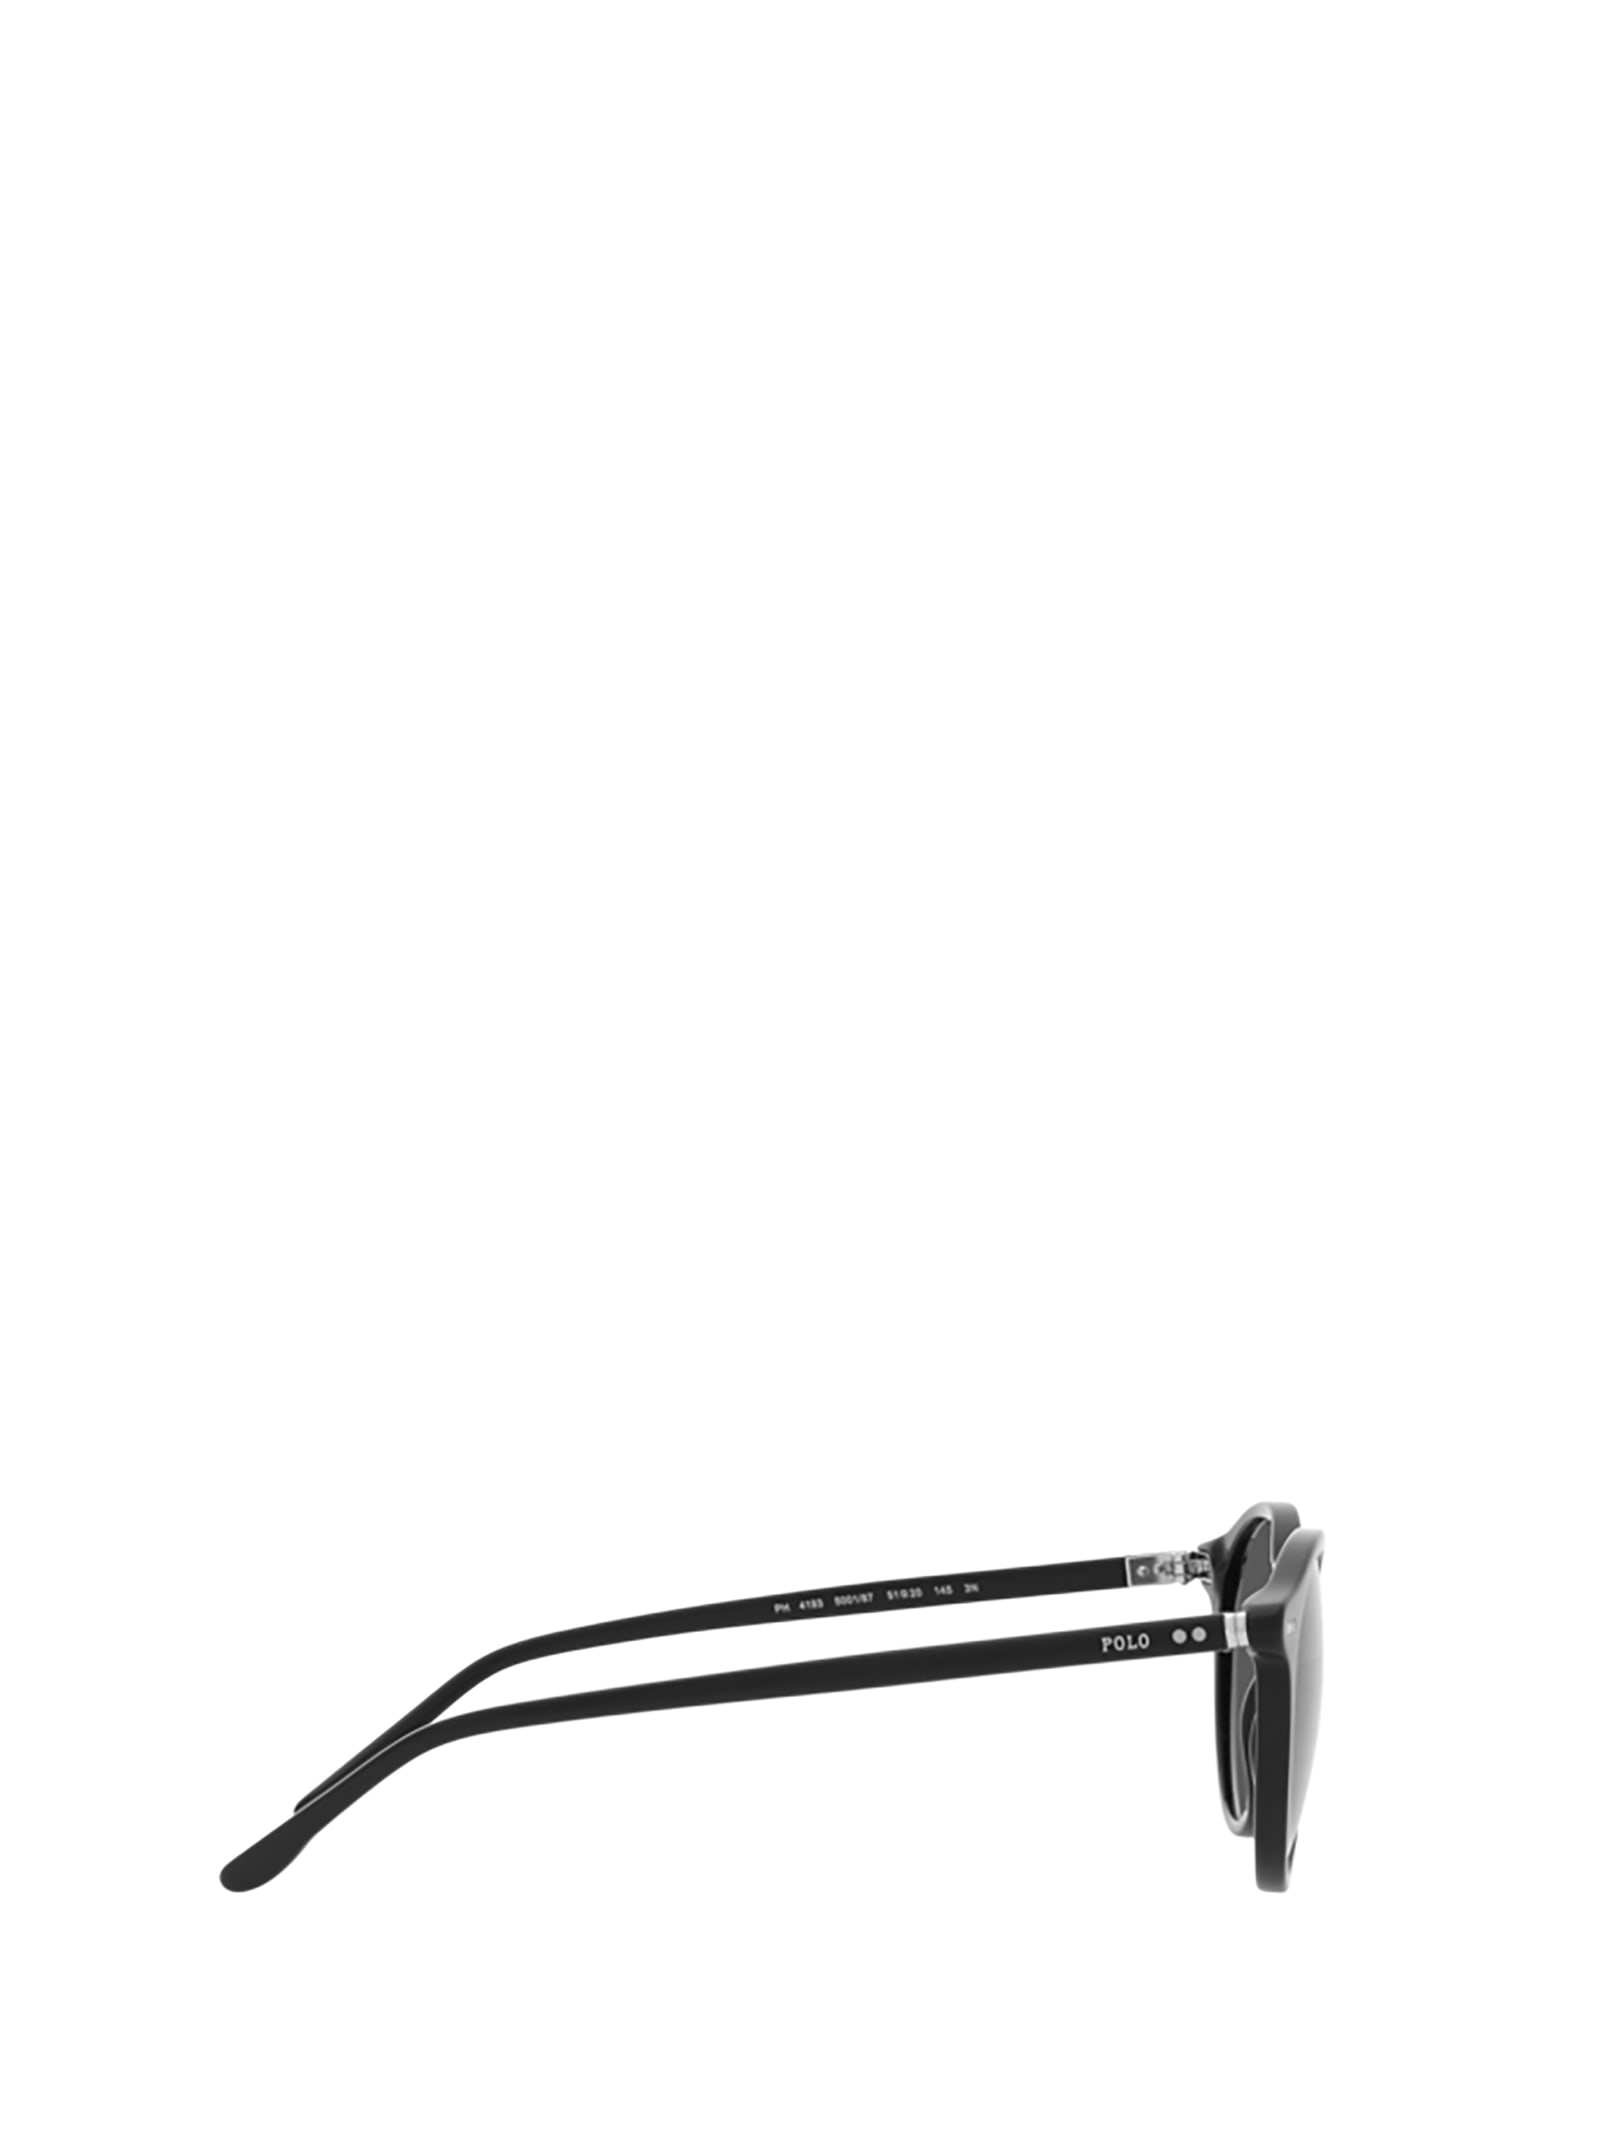 Shop Polo Ralph Lauren Ph4193 Shiny Black Sunglasses